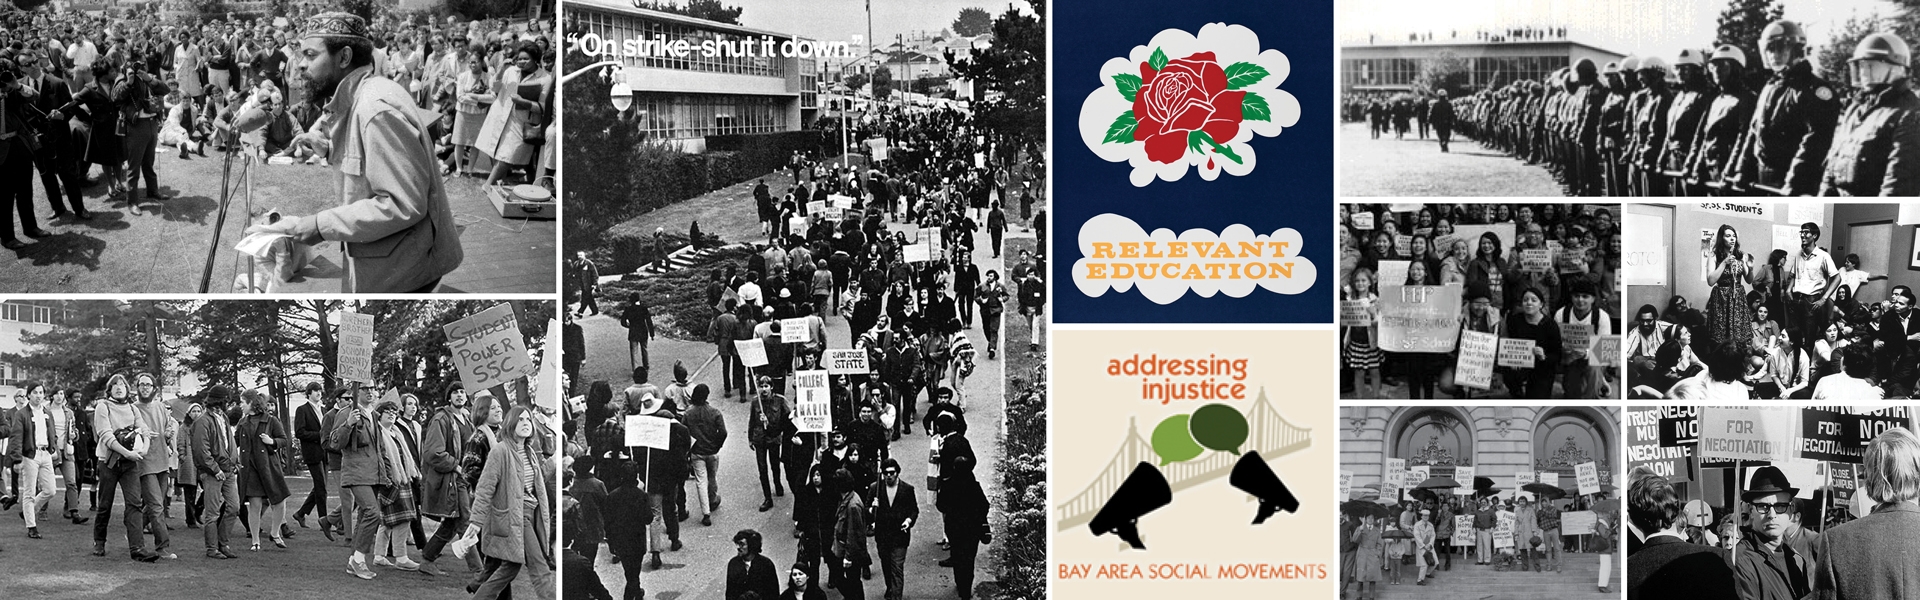 historical student strike 1968-69